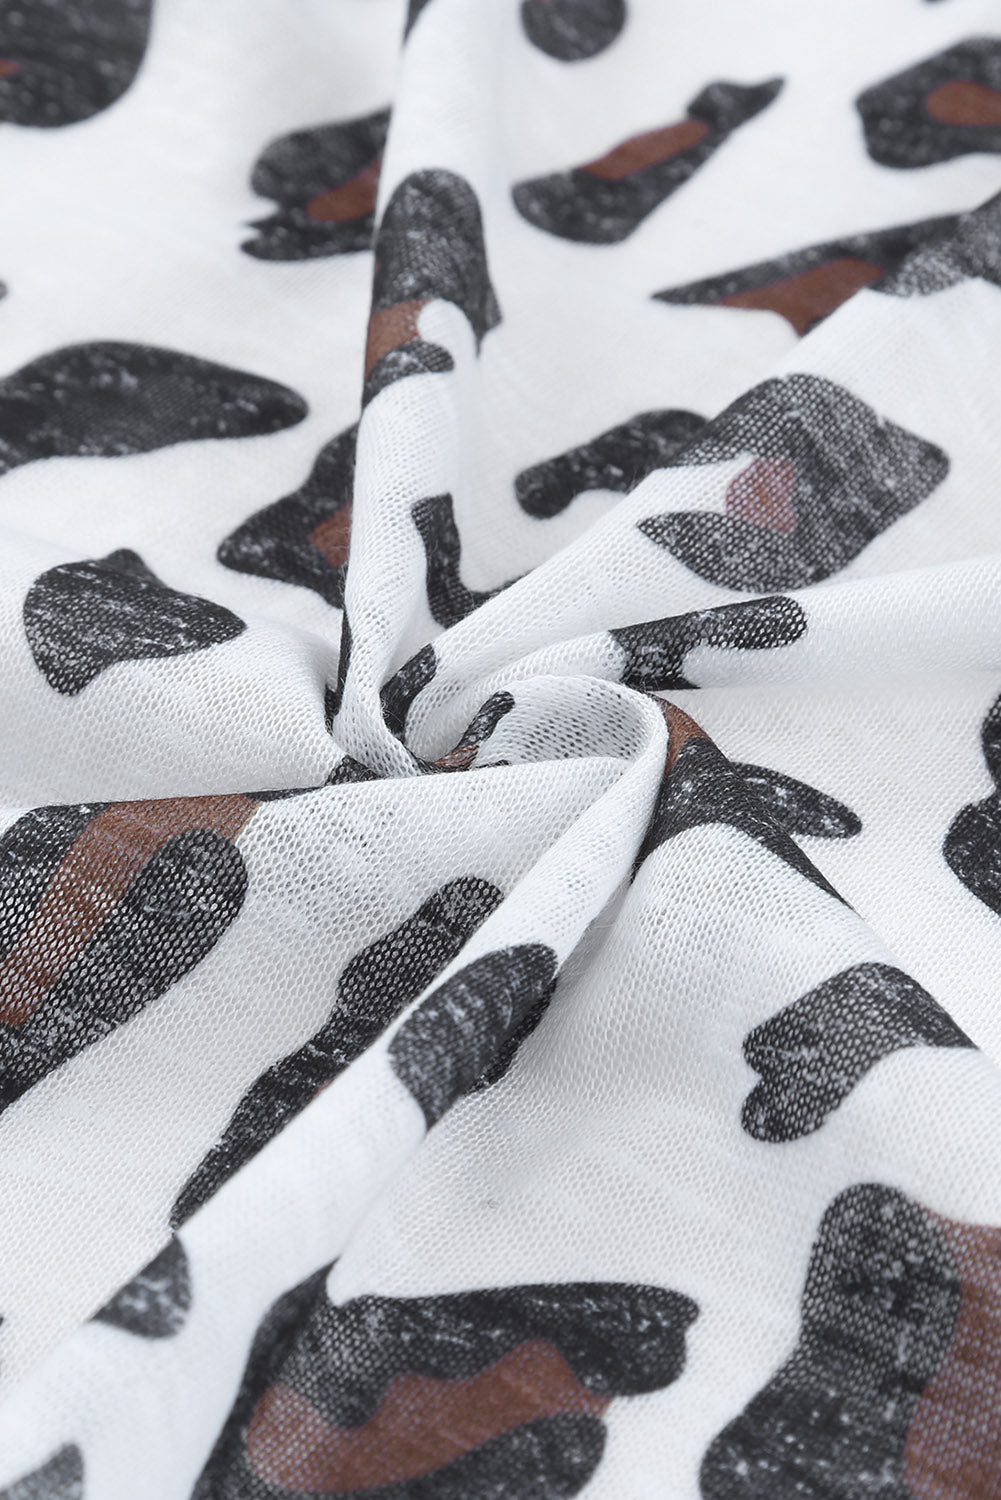 White Vintage Leopard Print Open Cardigan Sweaters & Cardigans JT's Designer Fashion